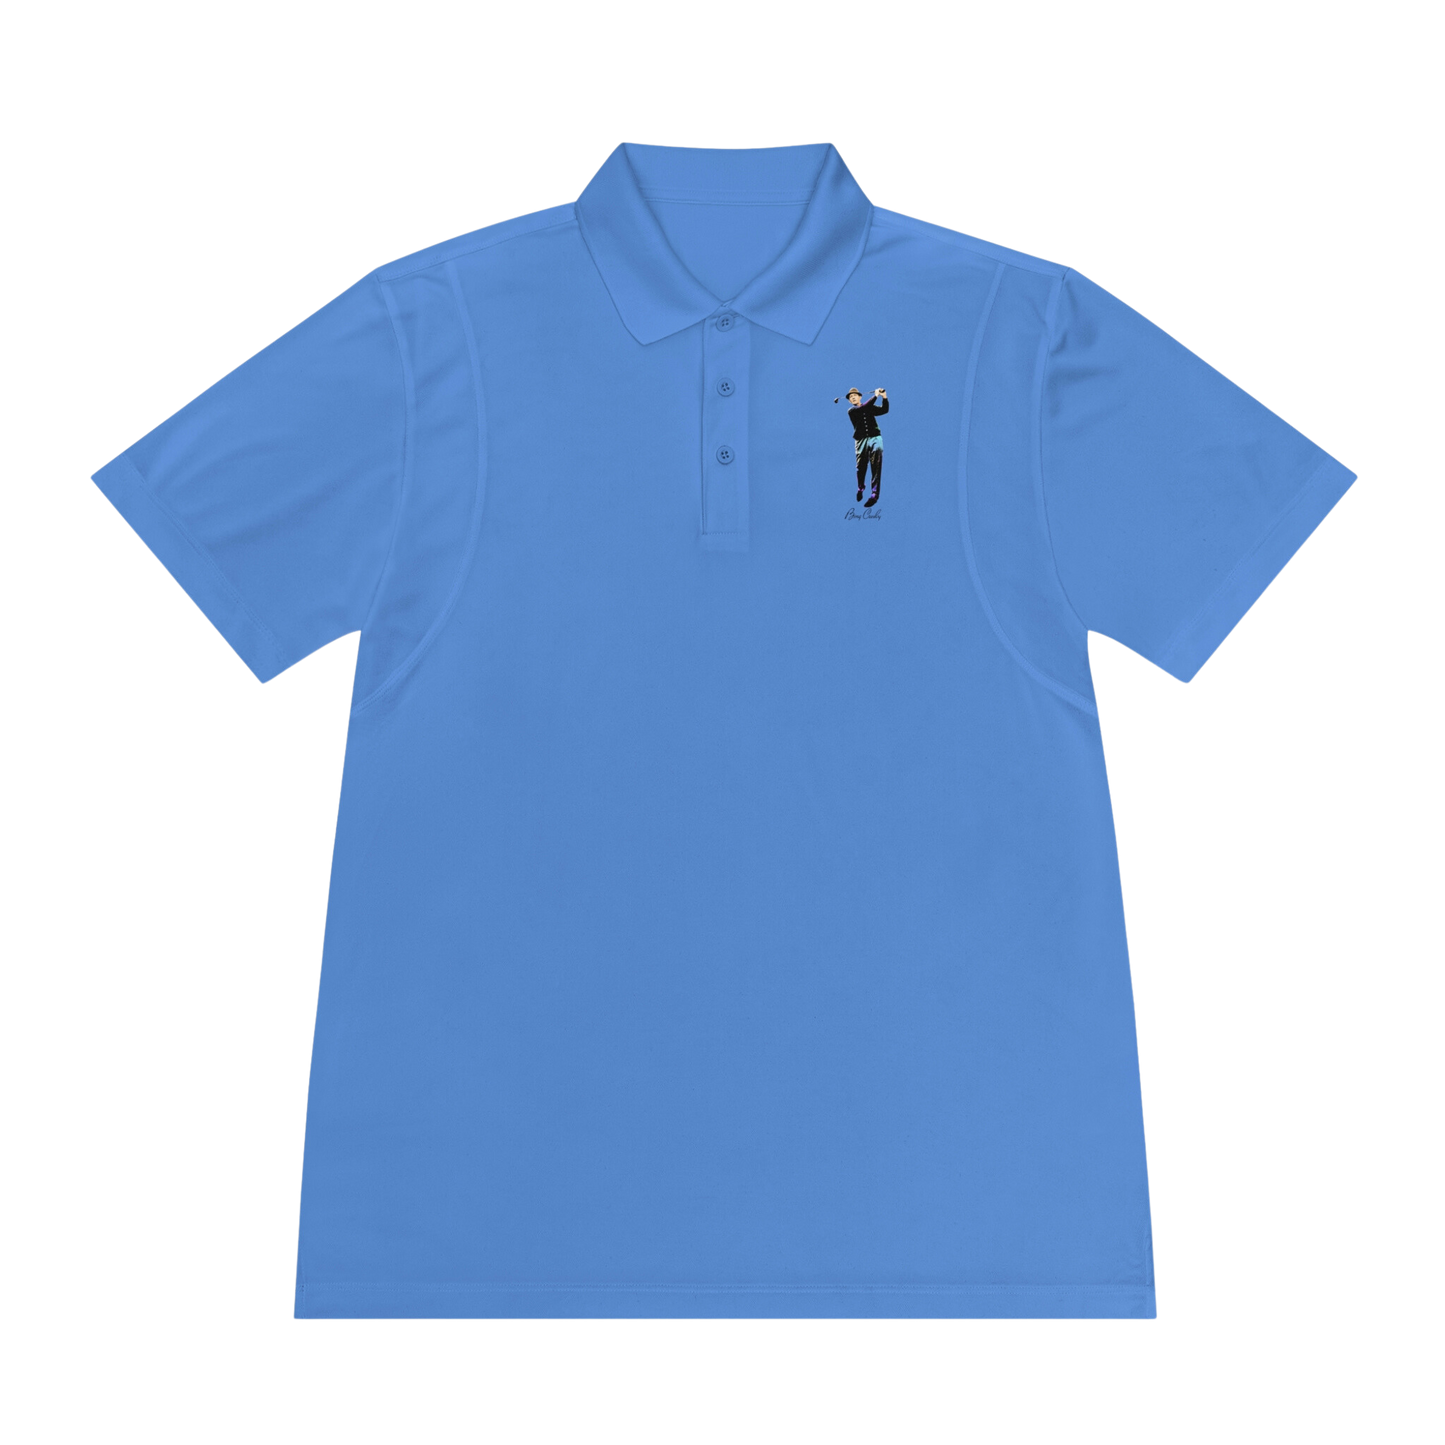 Bing Crosby Polo Shirt